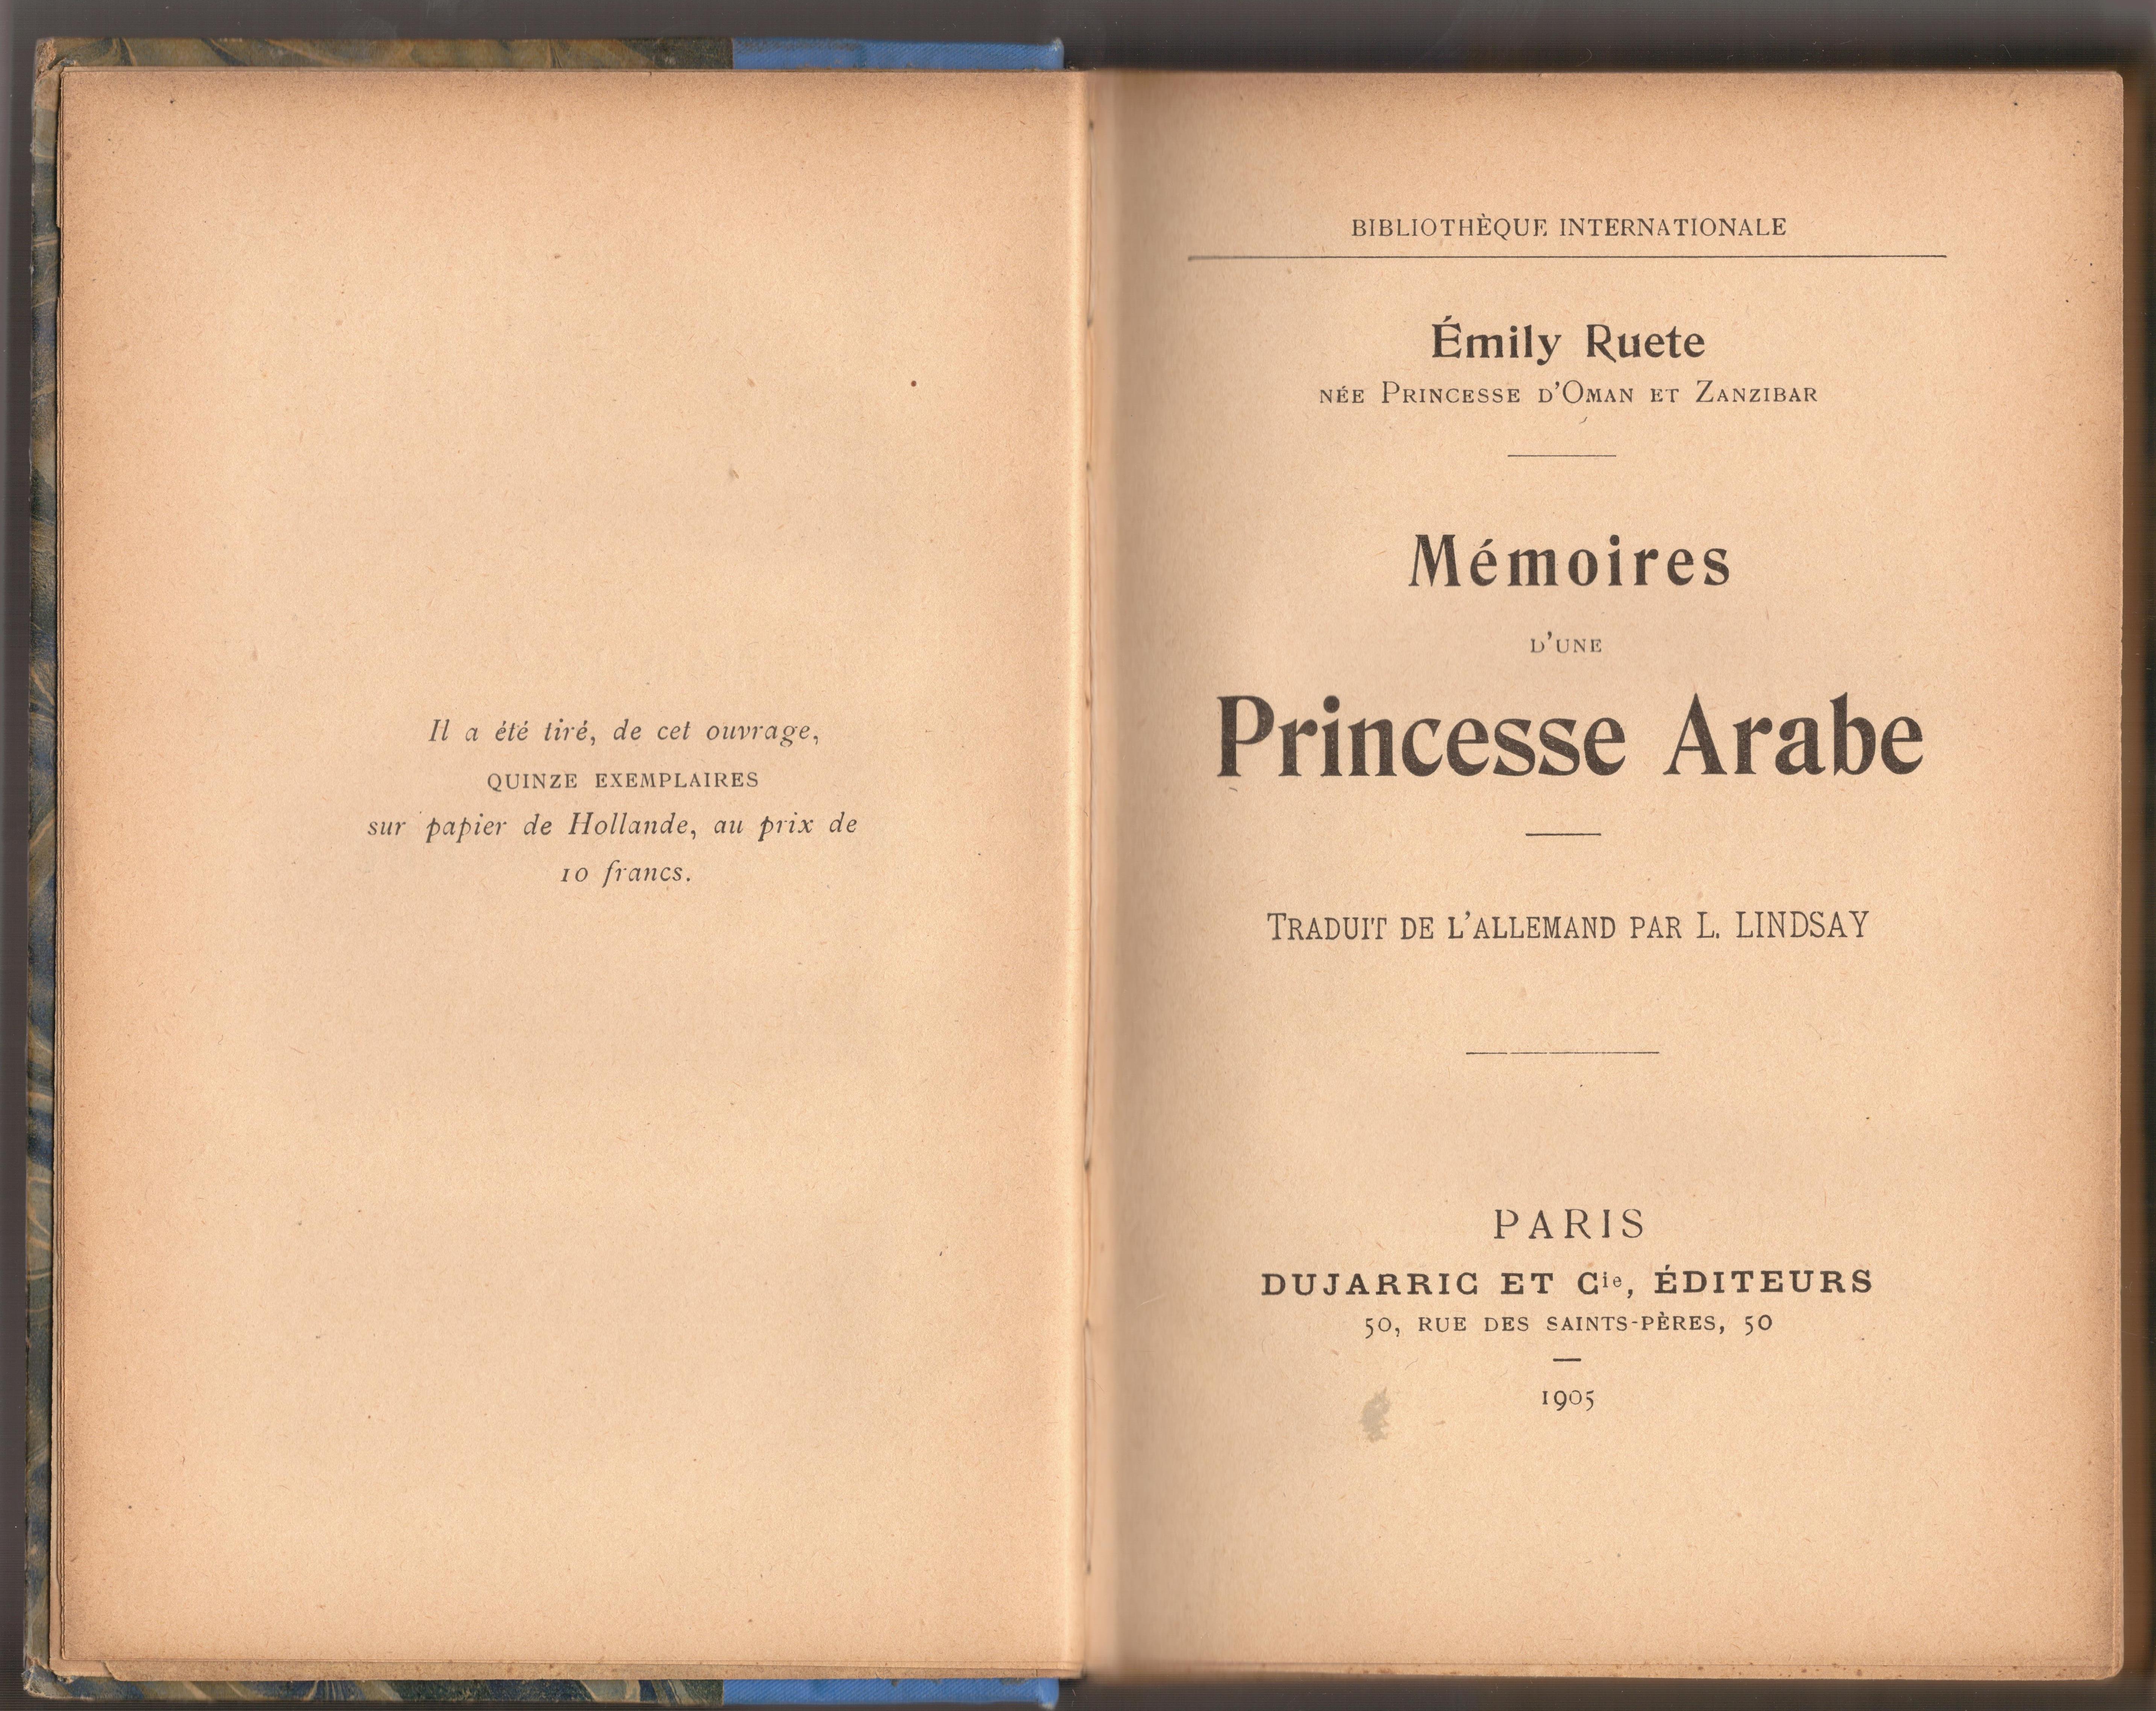 Memoires d'une Princesse Arabe 1905